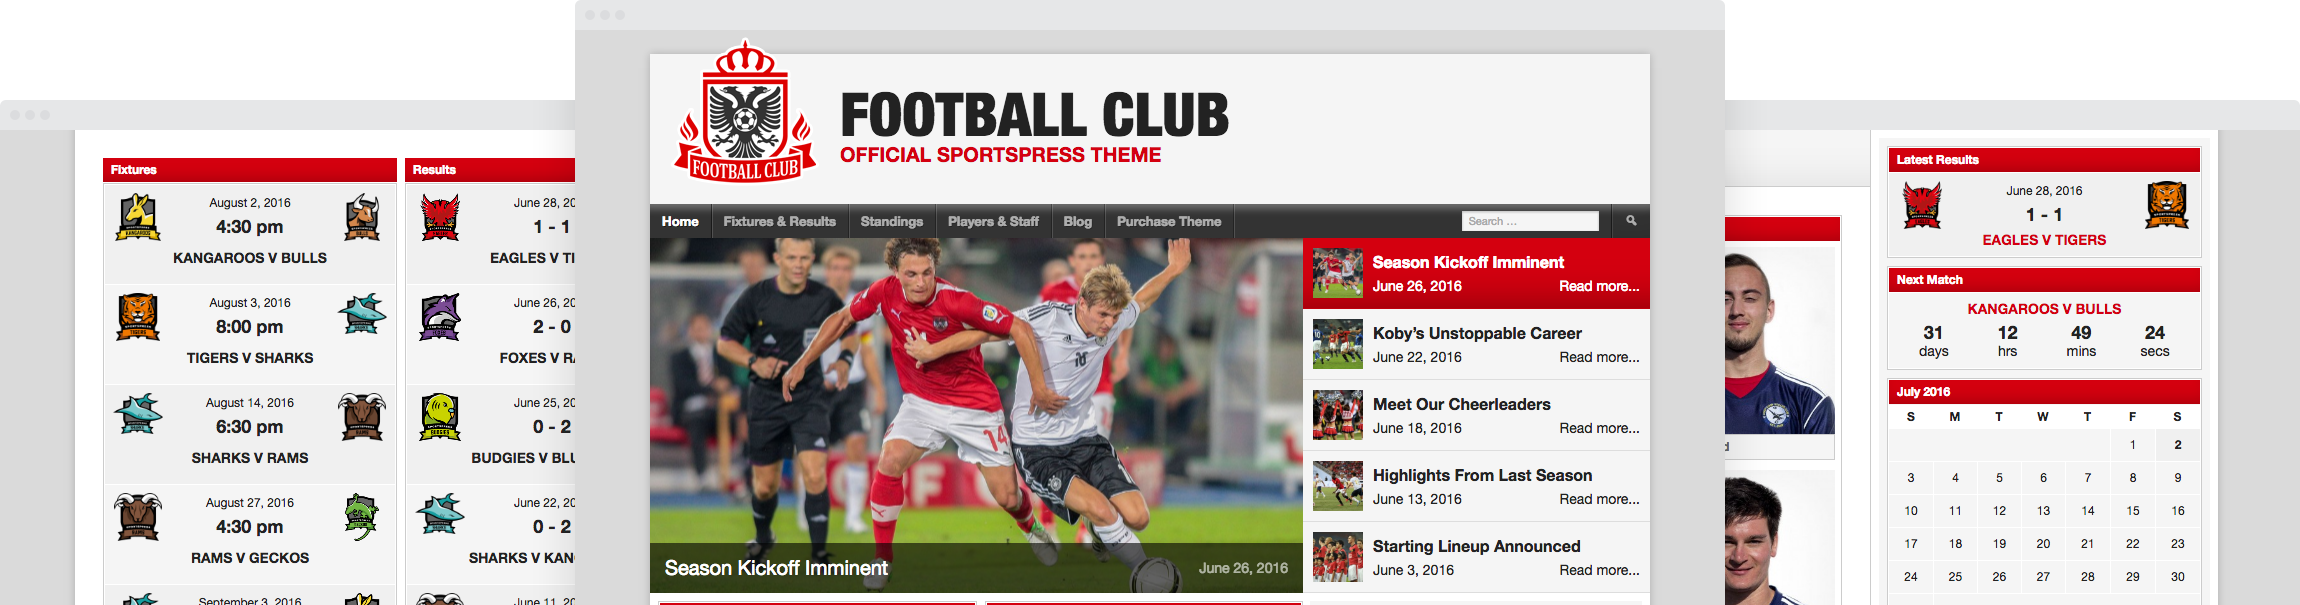 Football Club - Premium WordPress Theme for Soccer Teams - ThemeBoy